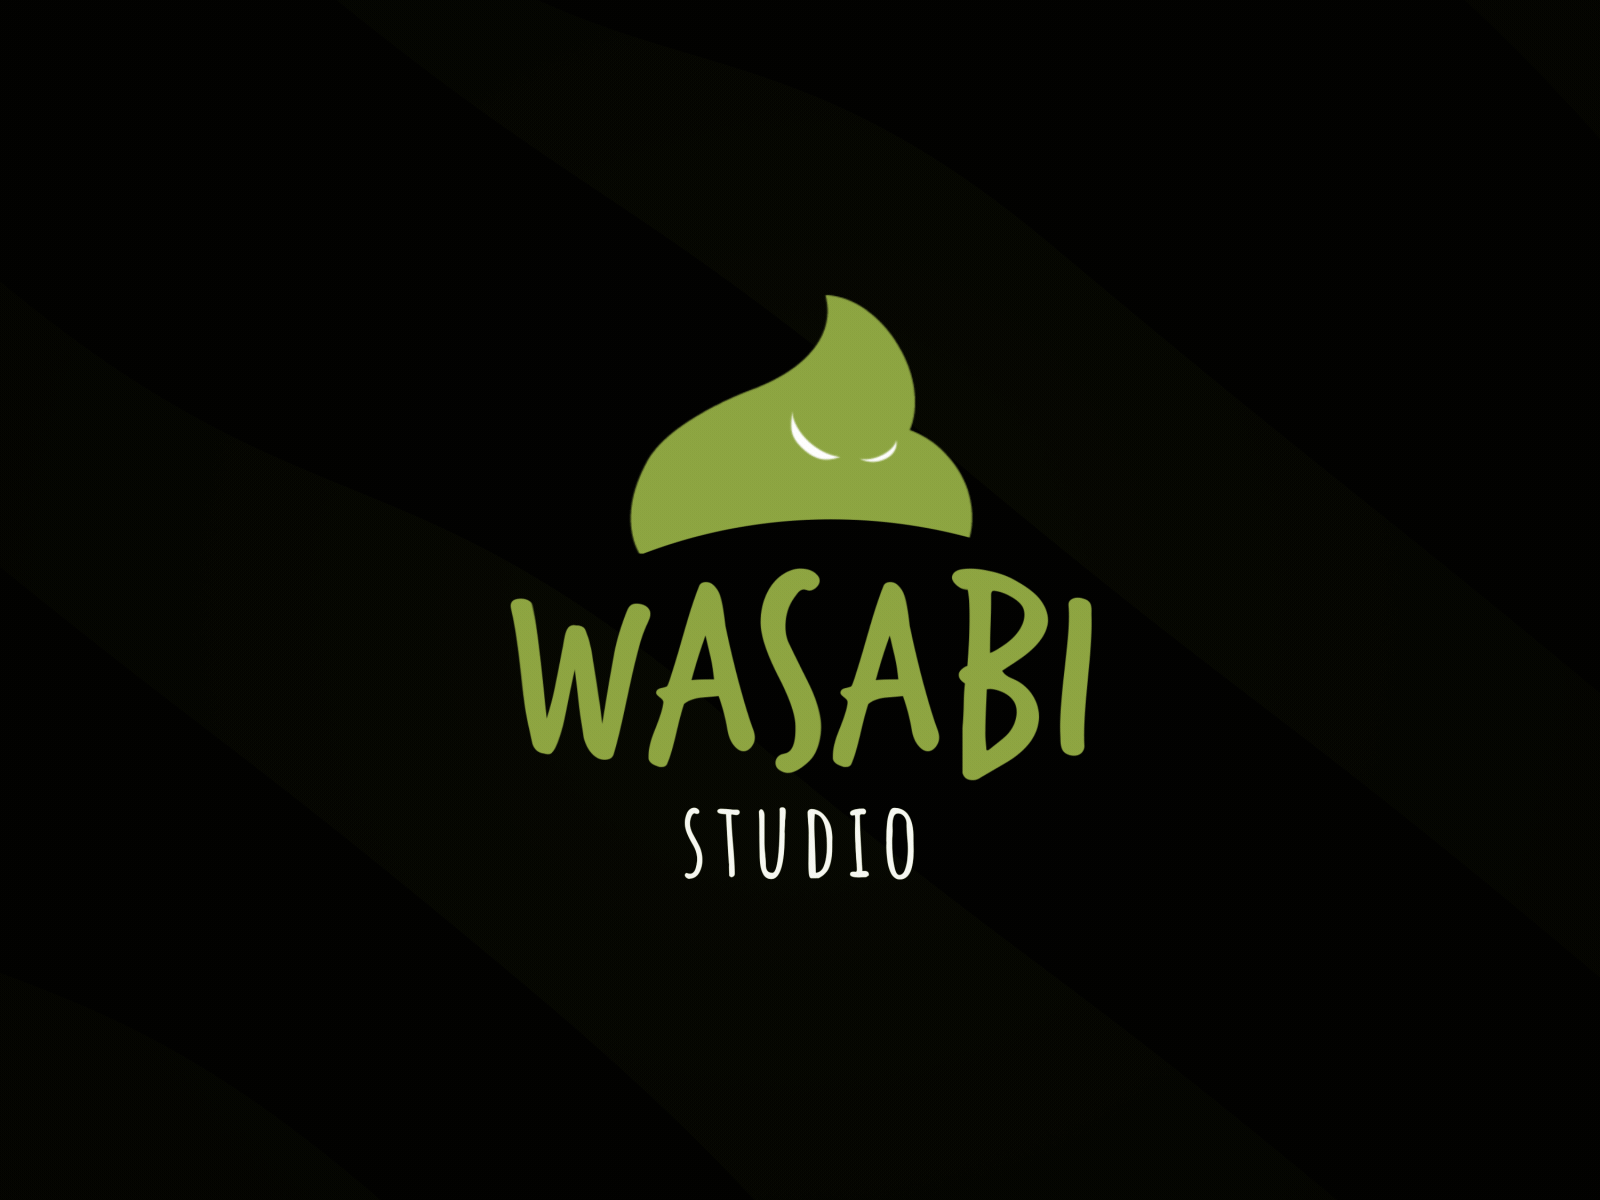 Wasabi Studio logomotion